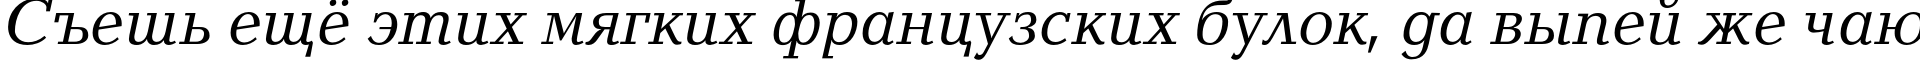 Пример написания шрифтом BalticaC Italic текста на русском